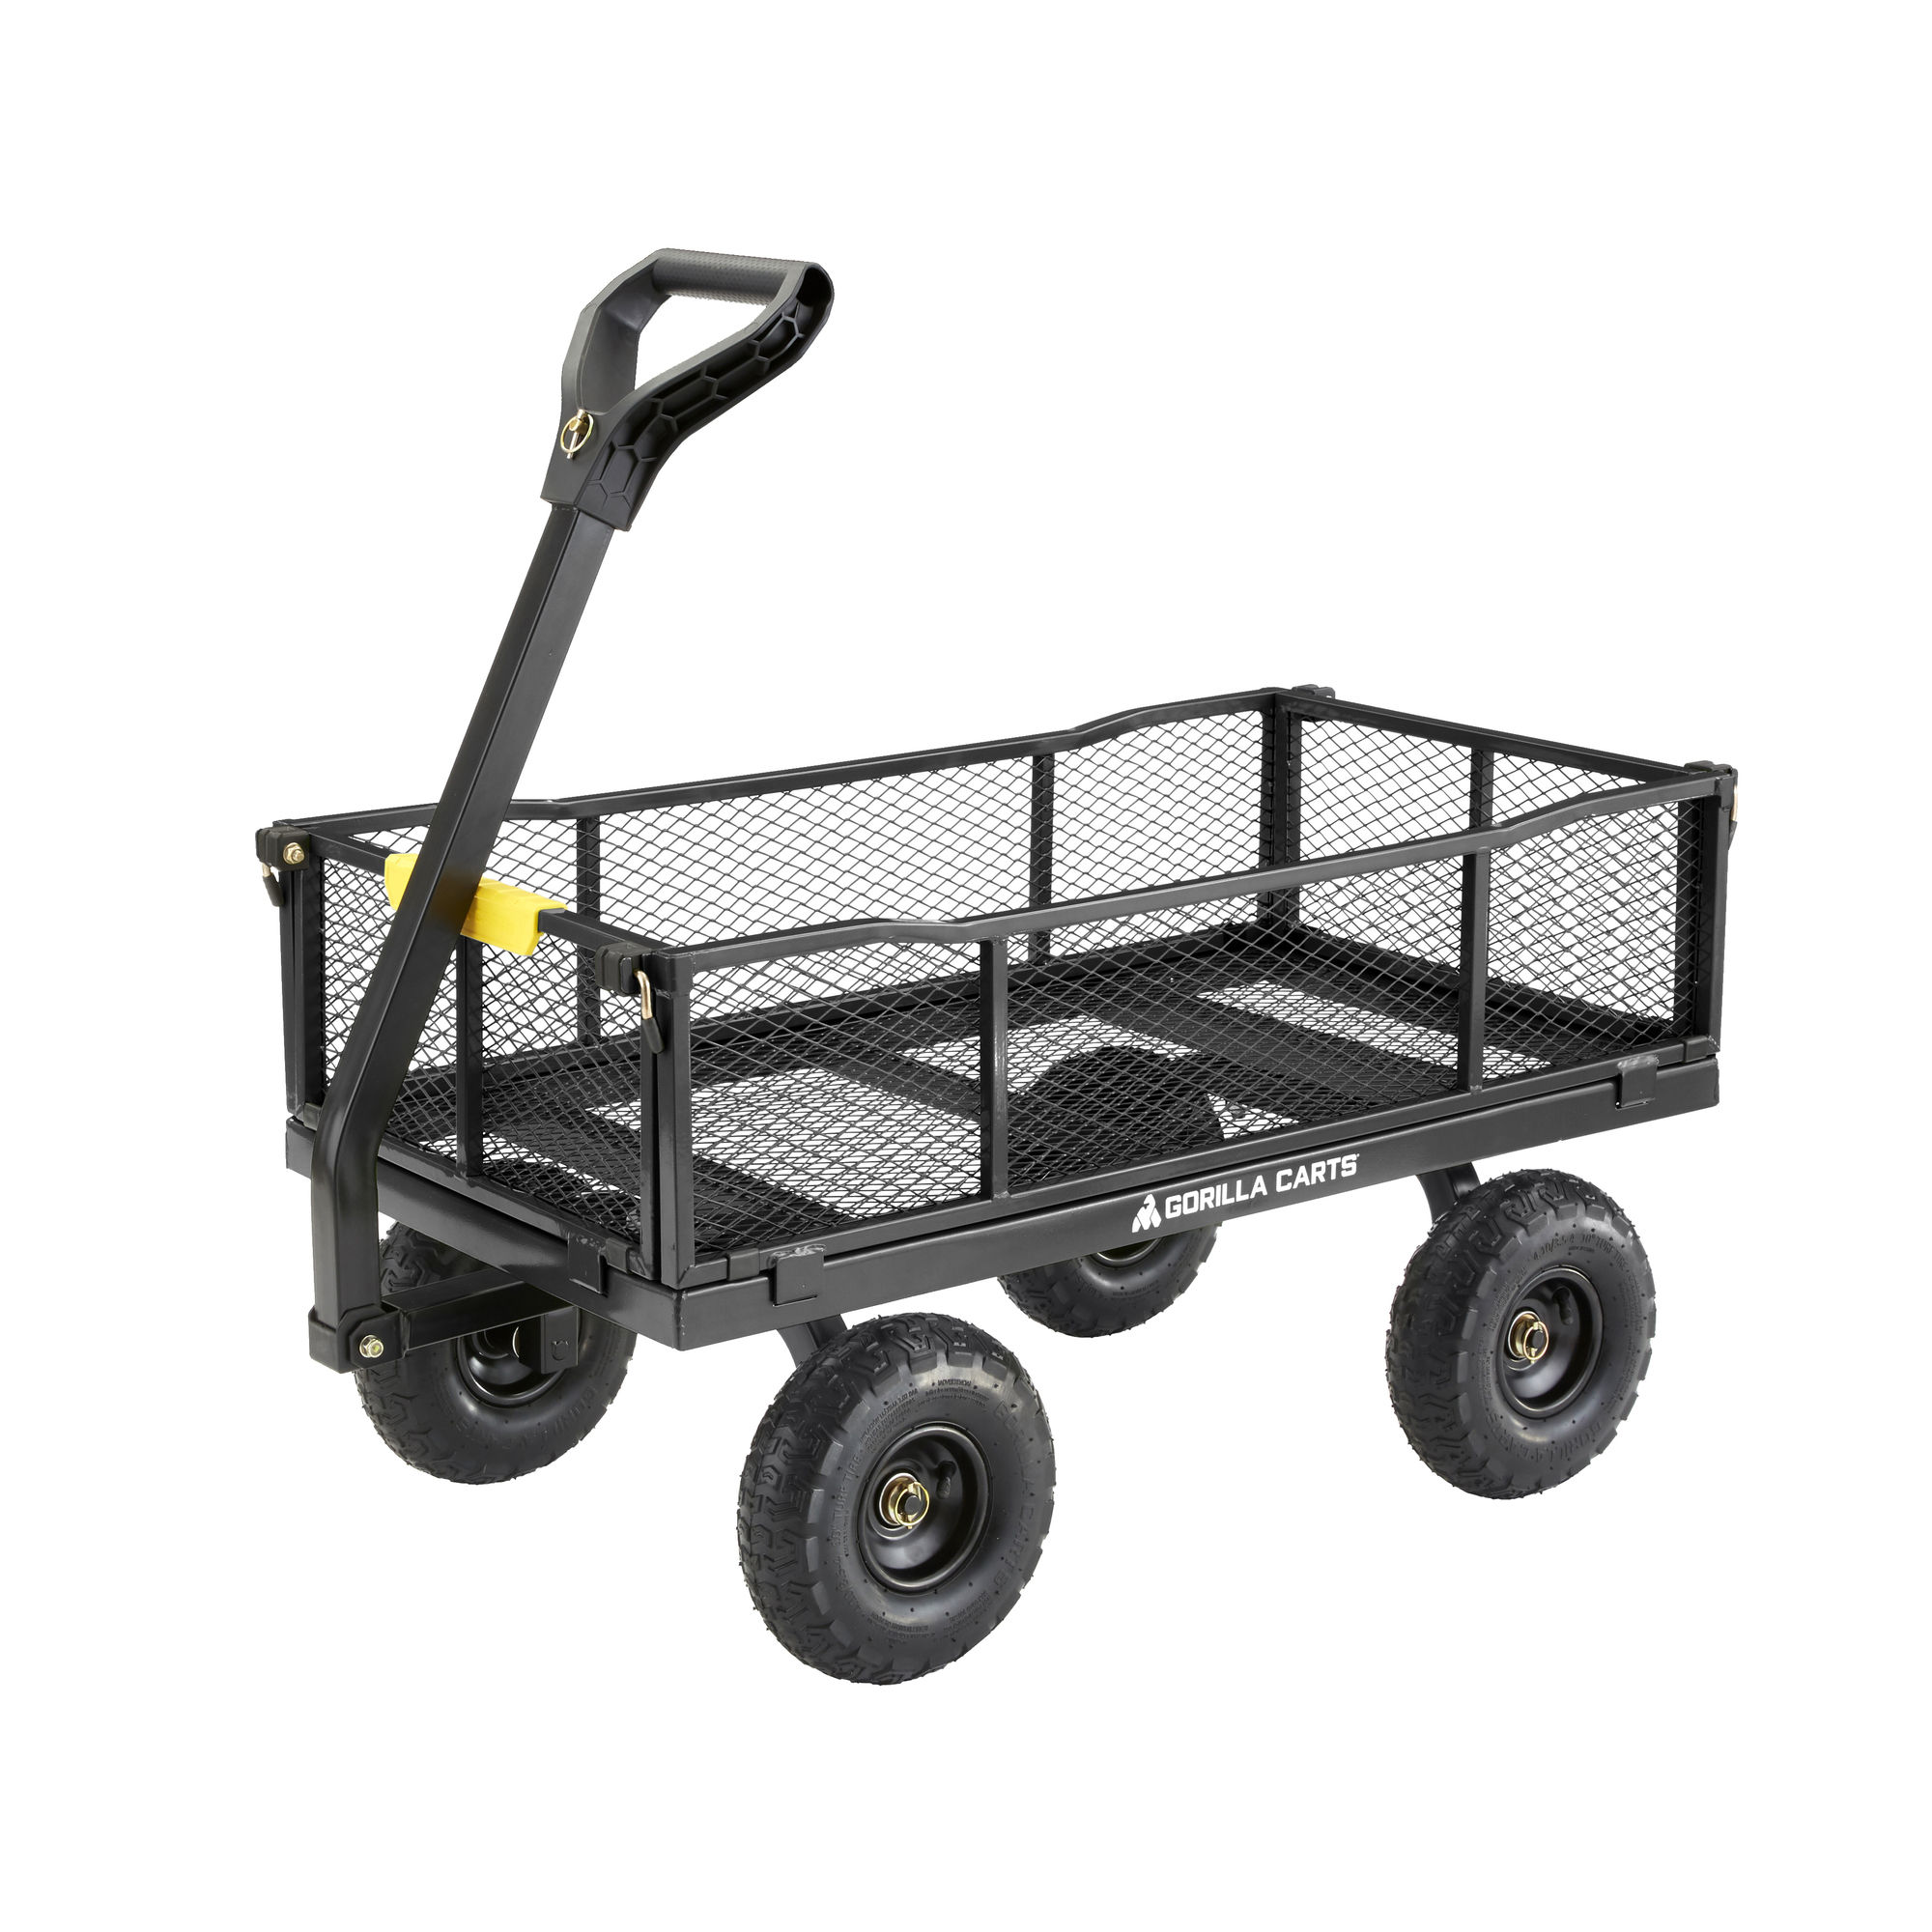 Gorilla Carts GOR1400-Com 1400-lb. Heavy-Duty Steel Utility Cart